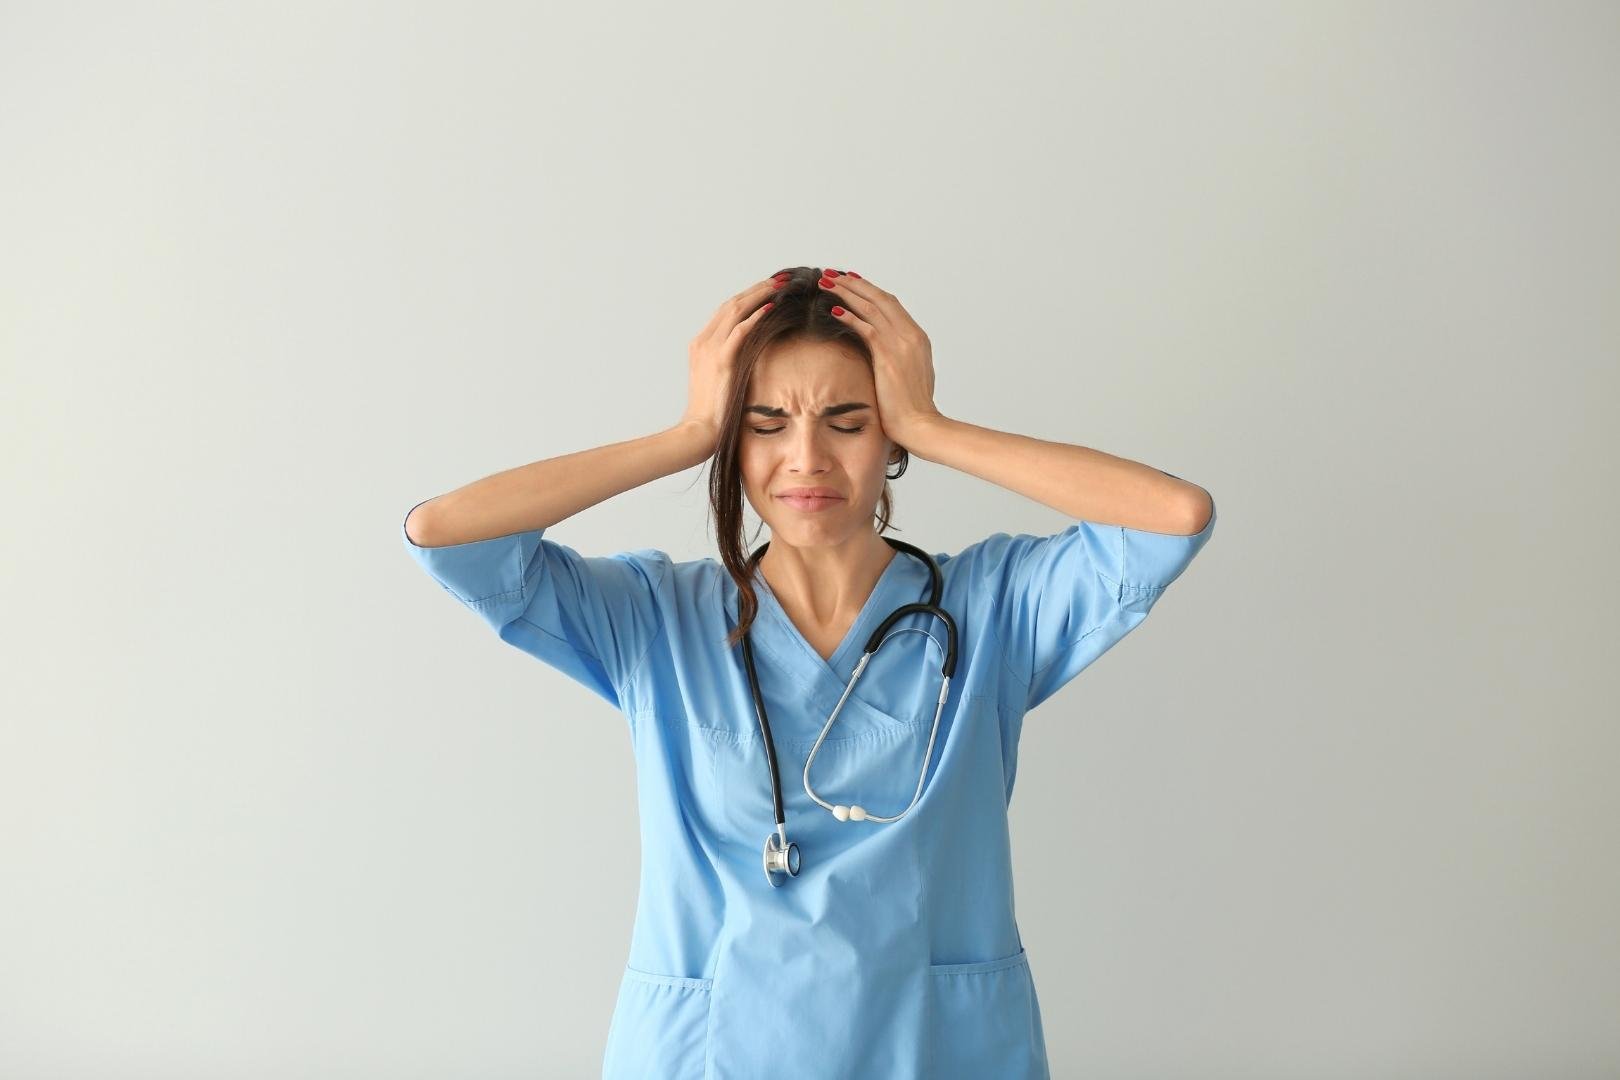 Average mental health nurse salary 